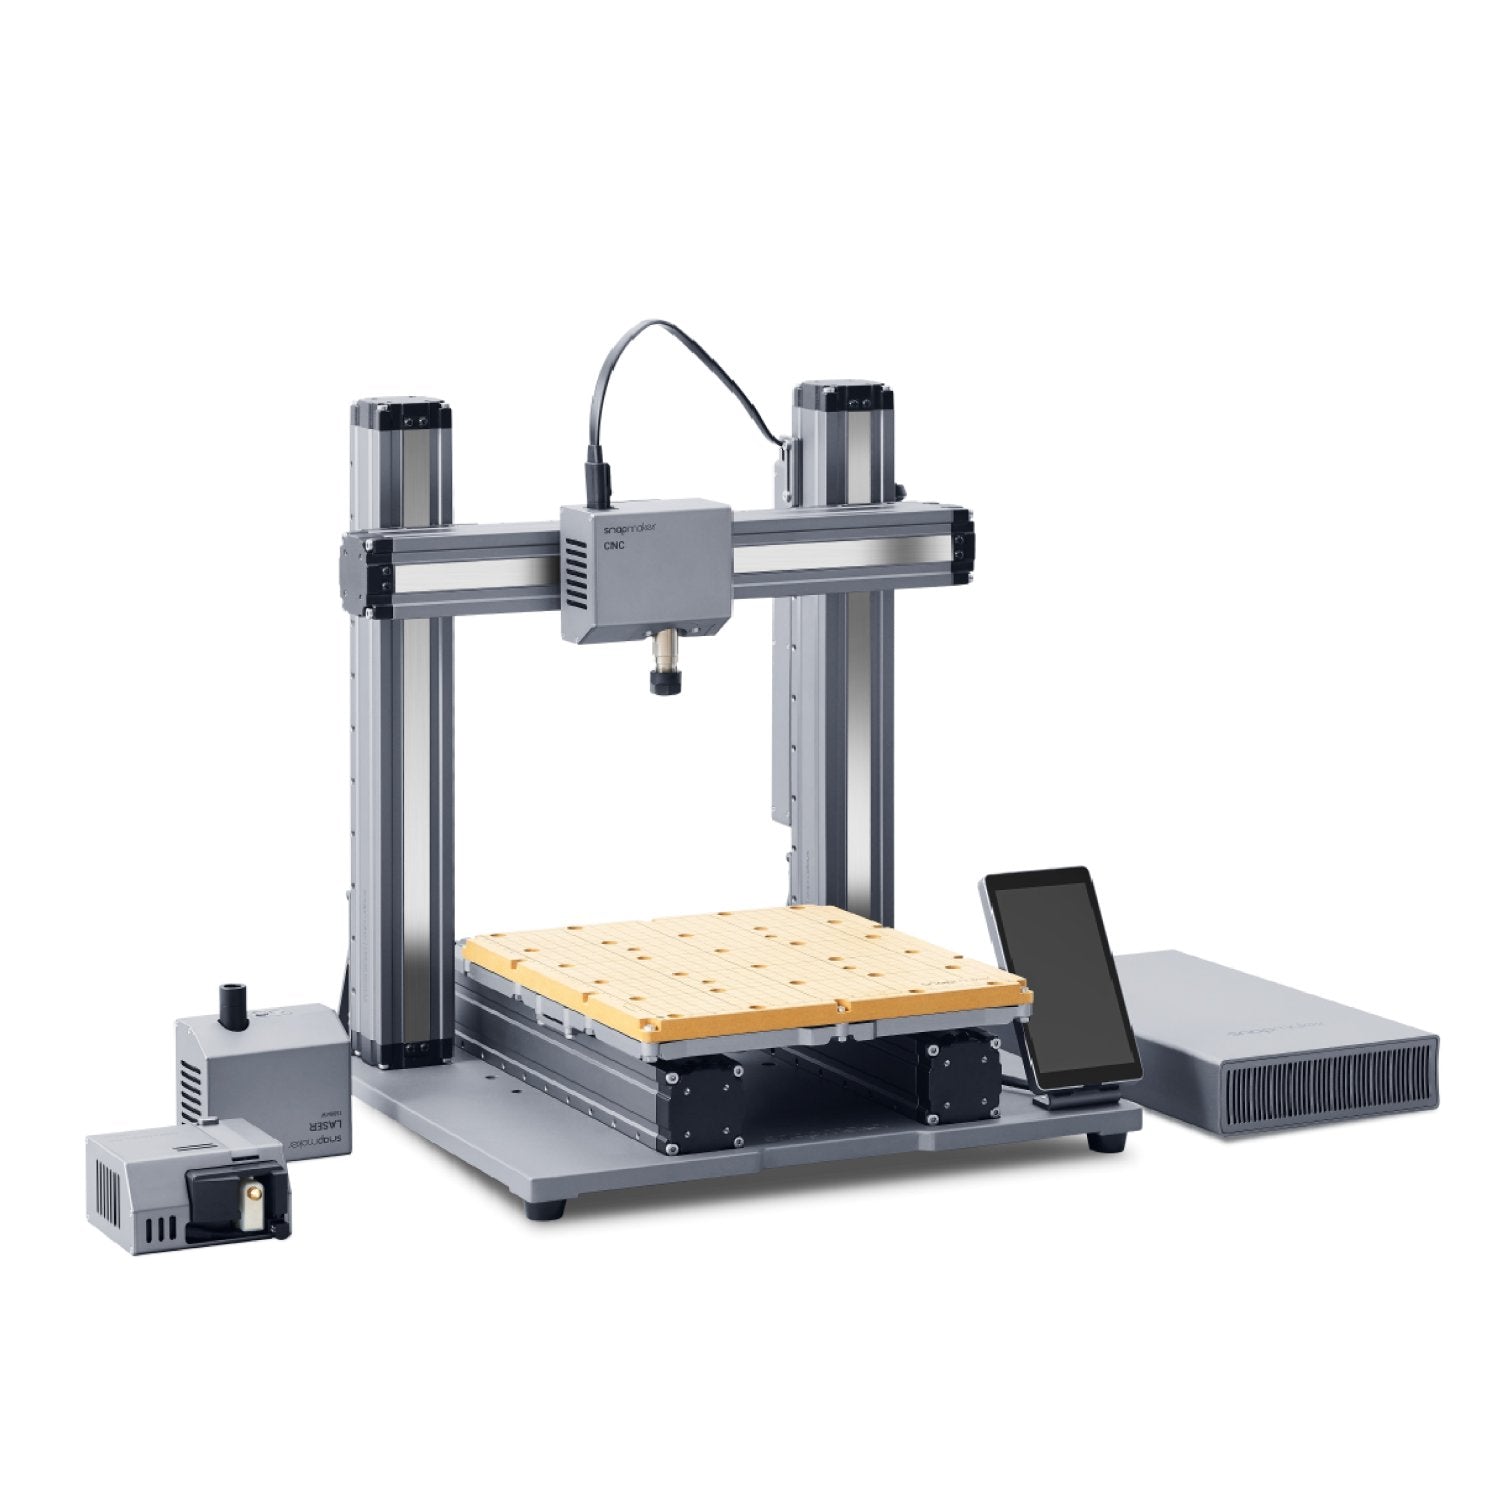 Snapmaker 2.0 Modular 3-in-1 3D Printer - A250T